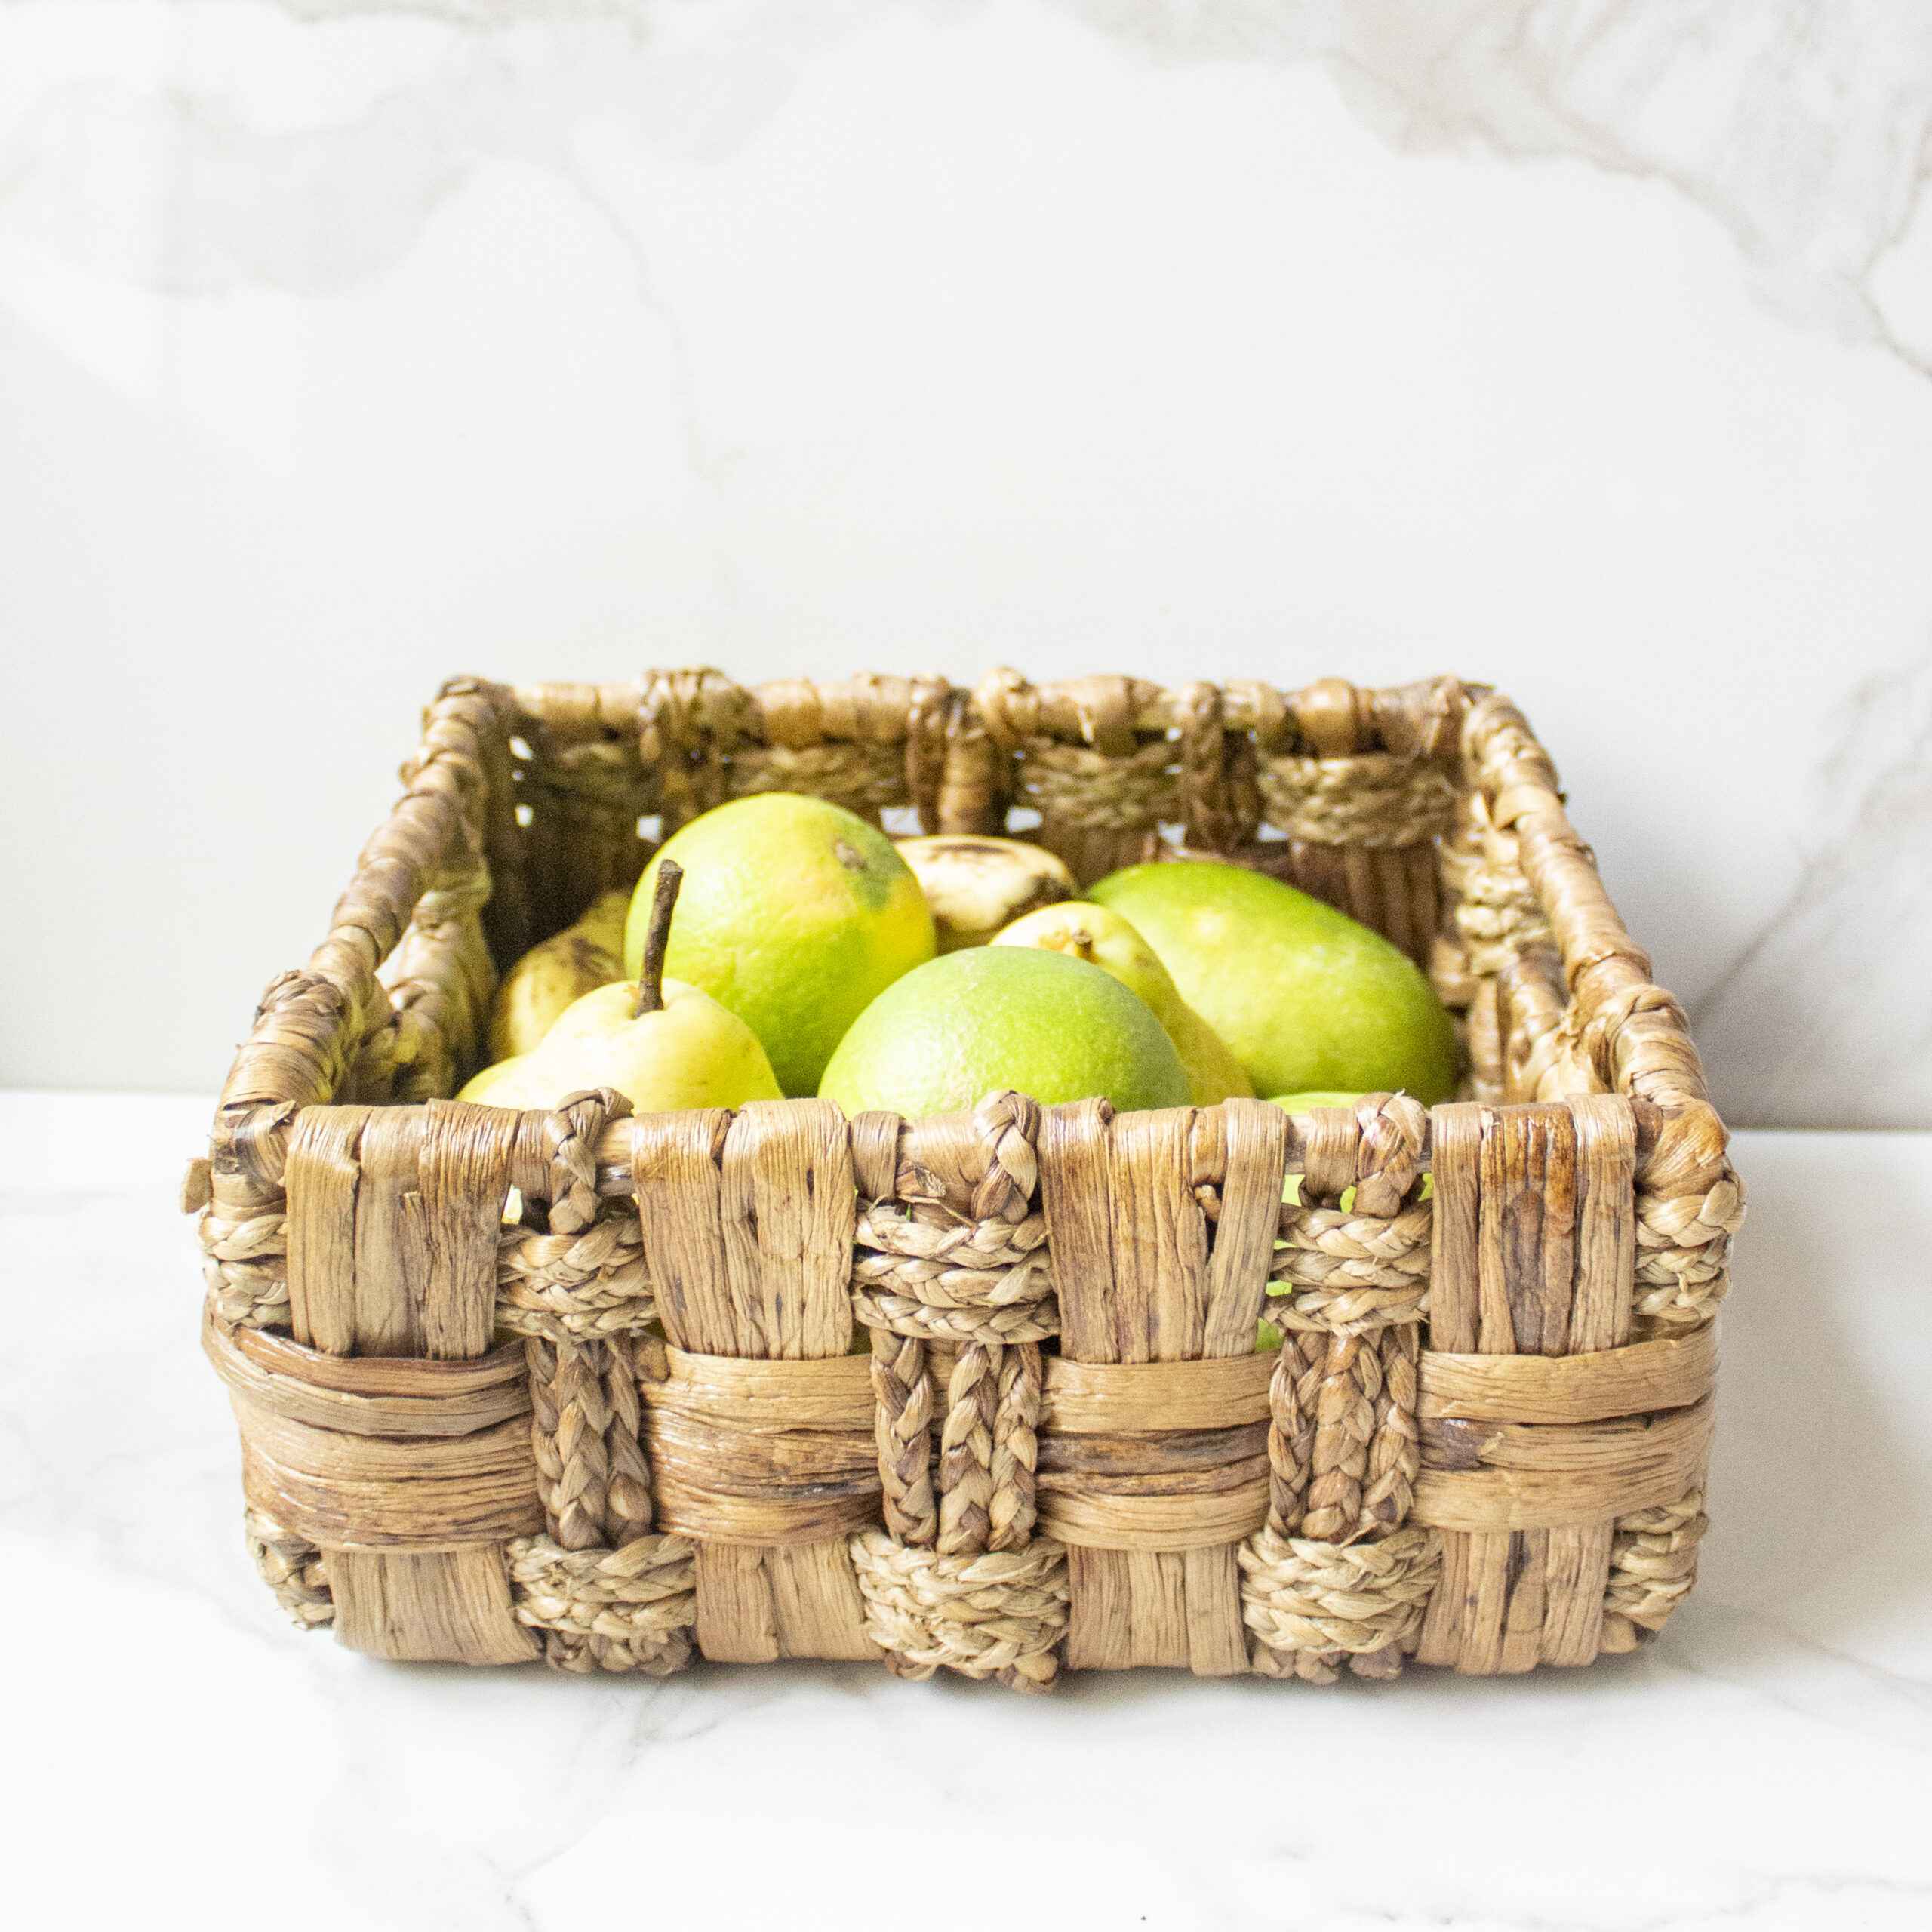 Bread or Utility Basket